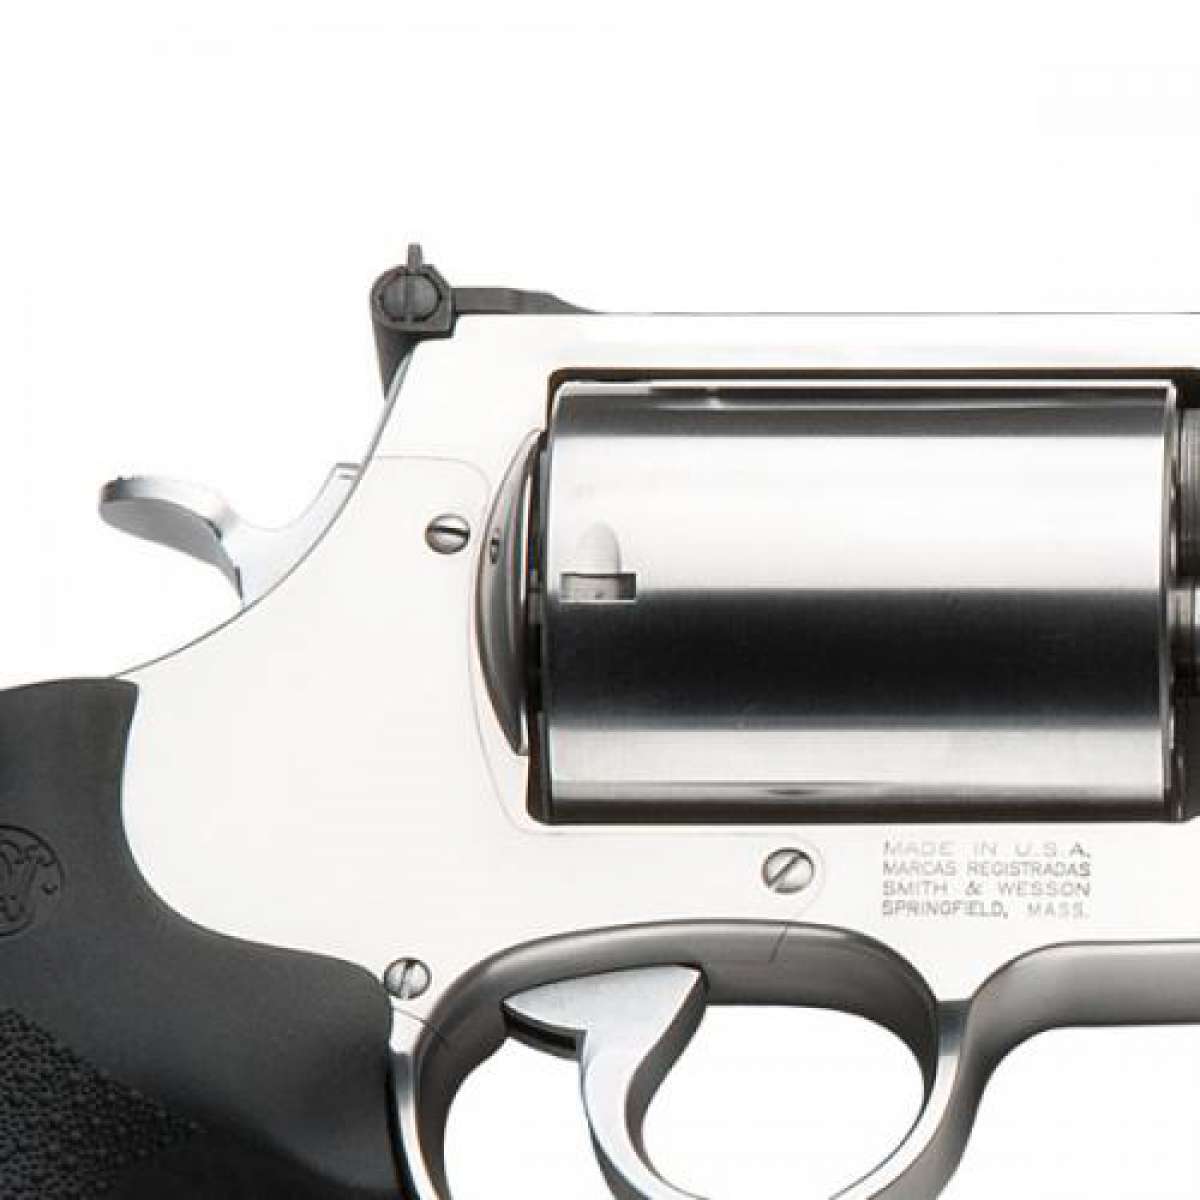 Smith & Wesson PERFORMANCE CENTER Model 460XVR - 14" Barrel with Bi-Pod (.460 S&W Magnum)